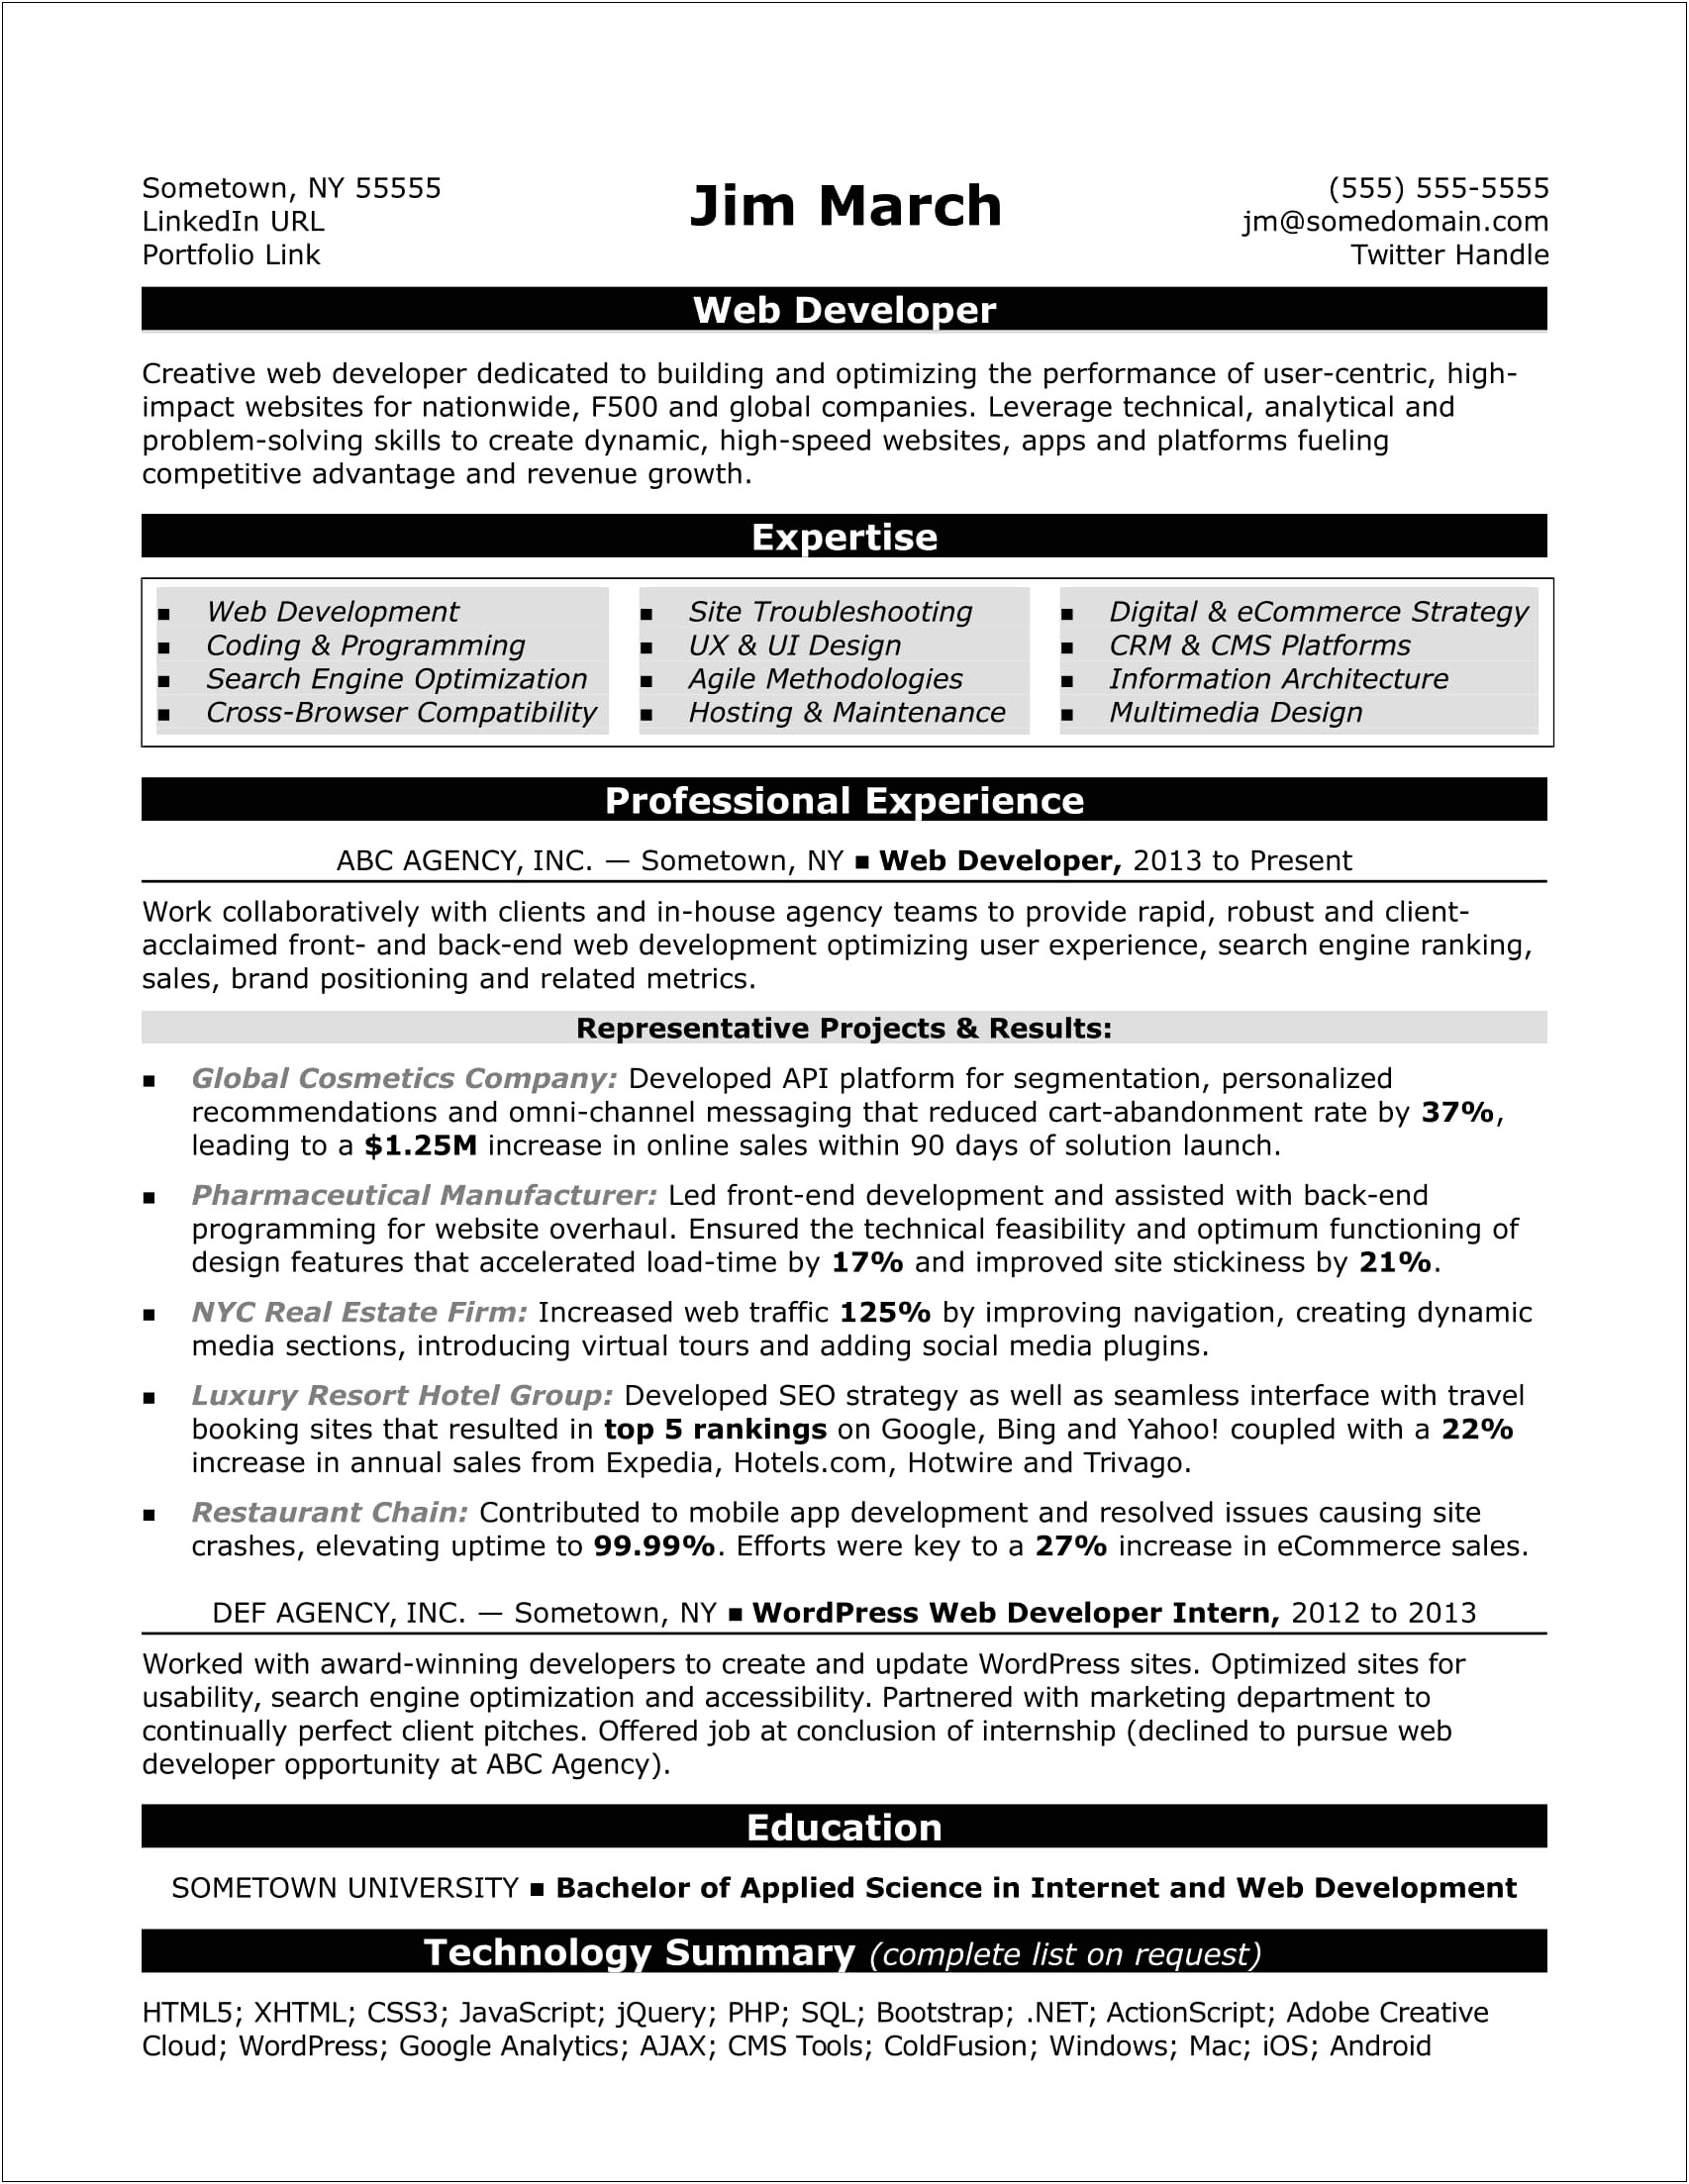 Sample Resume Internship Development International Center